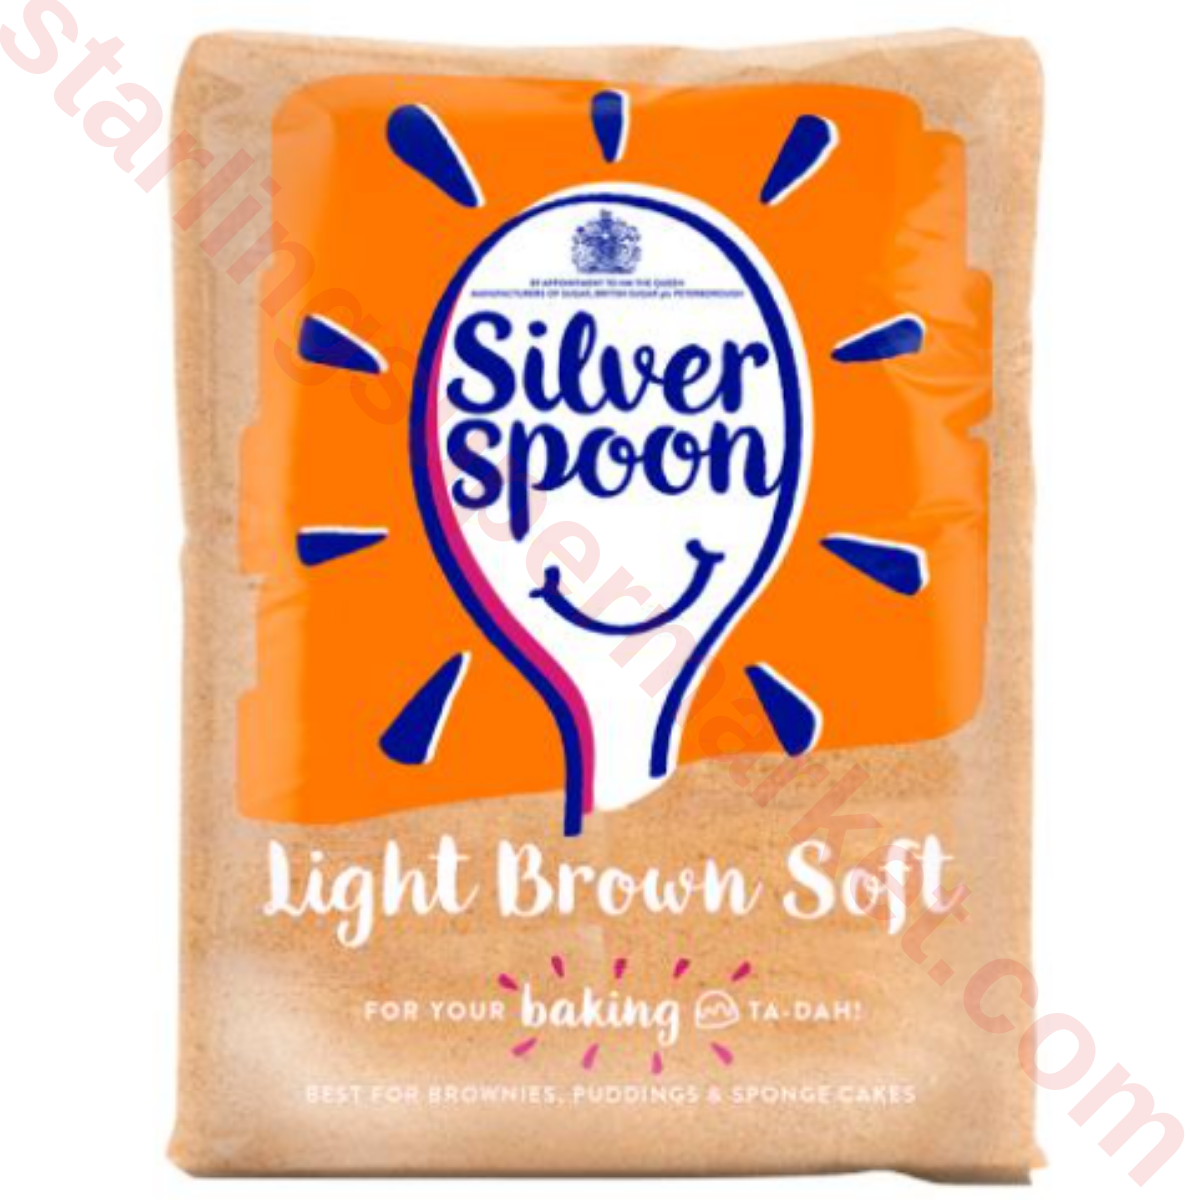 SILVER SPOON LIGHT BROWN SOFT SUGAR 500 G